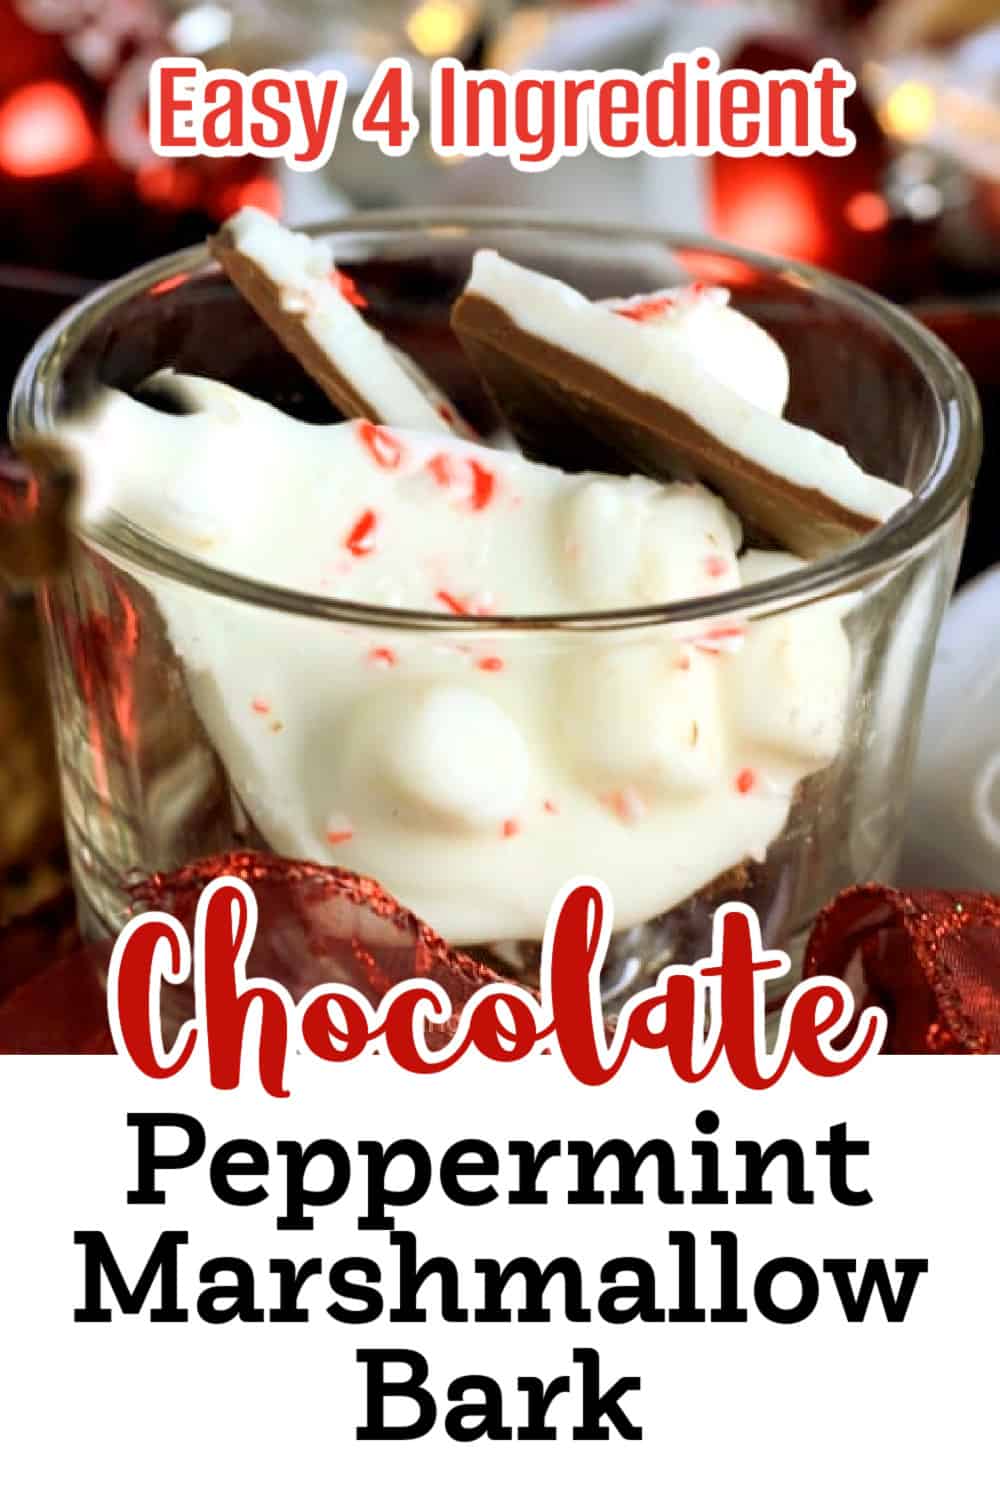 Ooh-la-la Chocolate Peppermint Marshmallow Bark